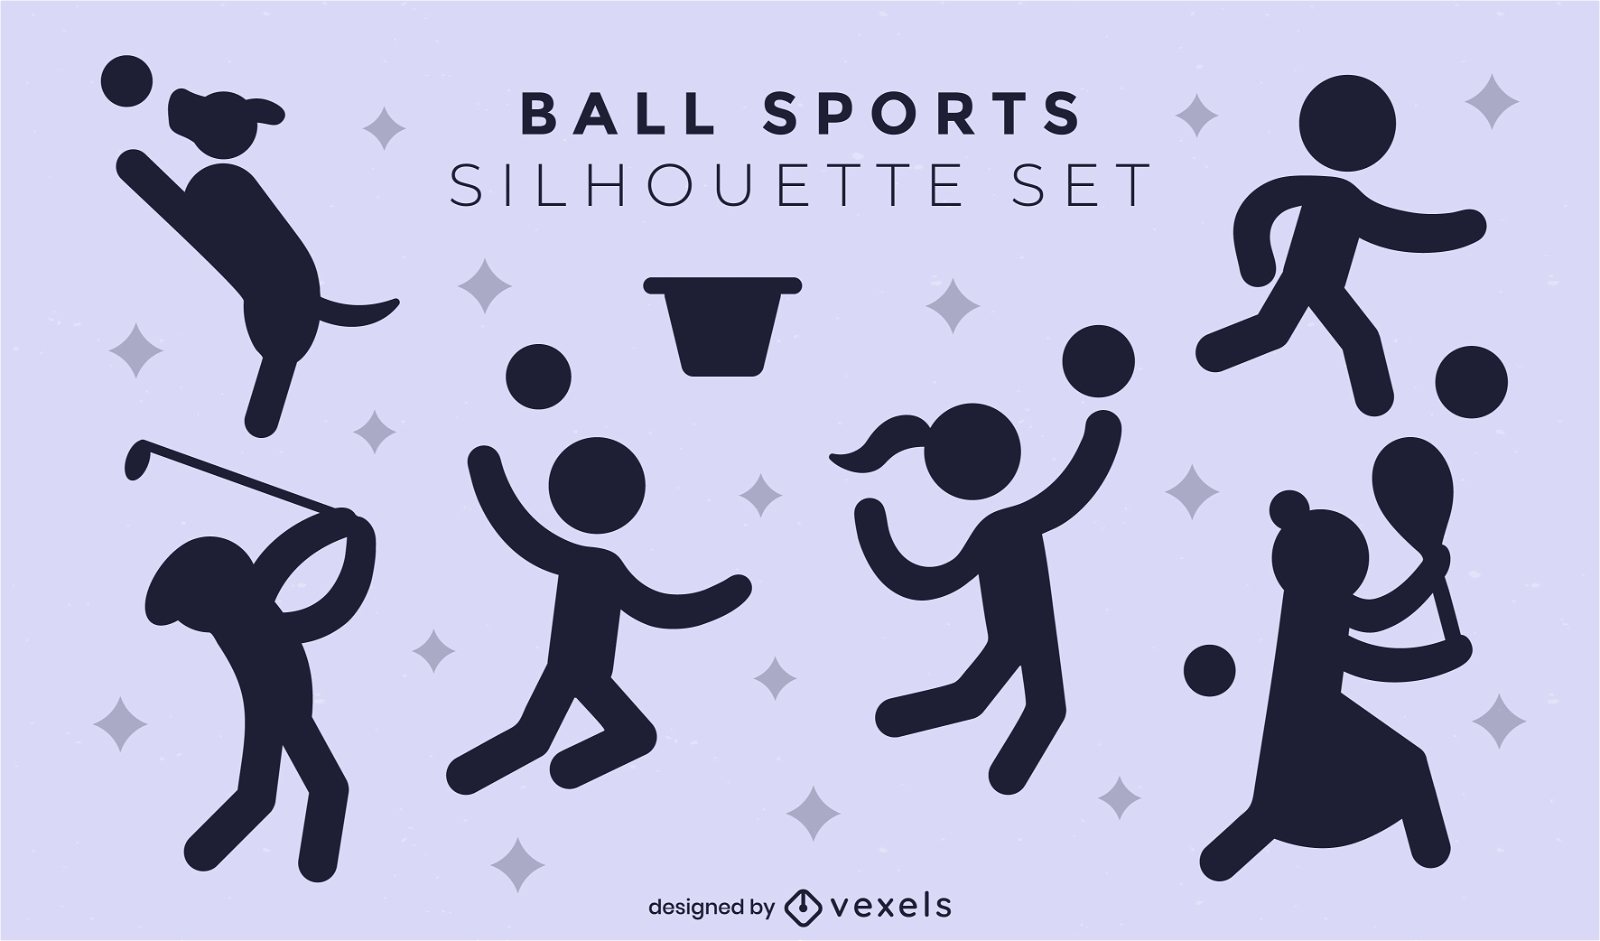 Ball sports silhouette set